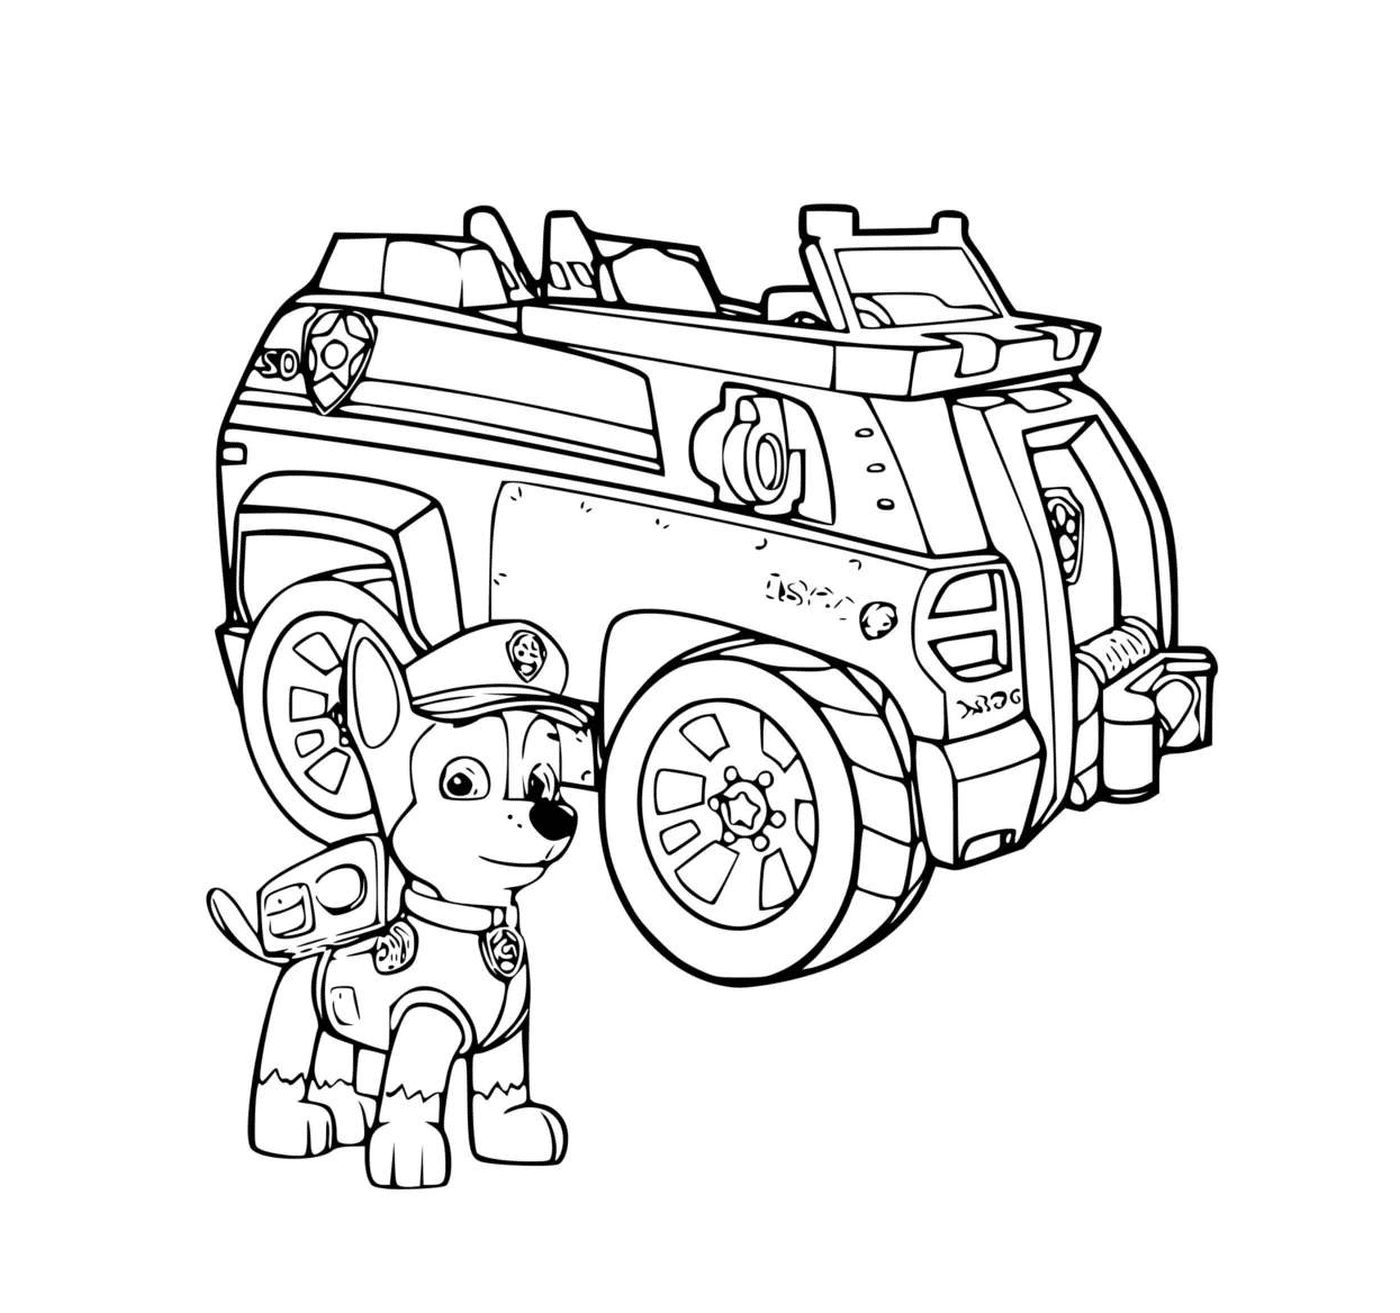  Pat Patrol vehicle, policeman and dog 